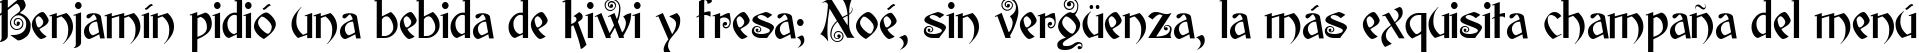 Пример написания шрифтом Edisson текста на испанском